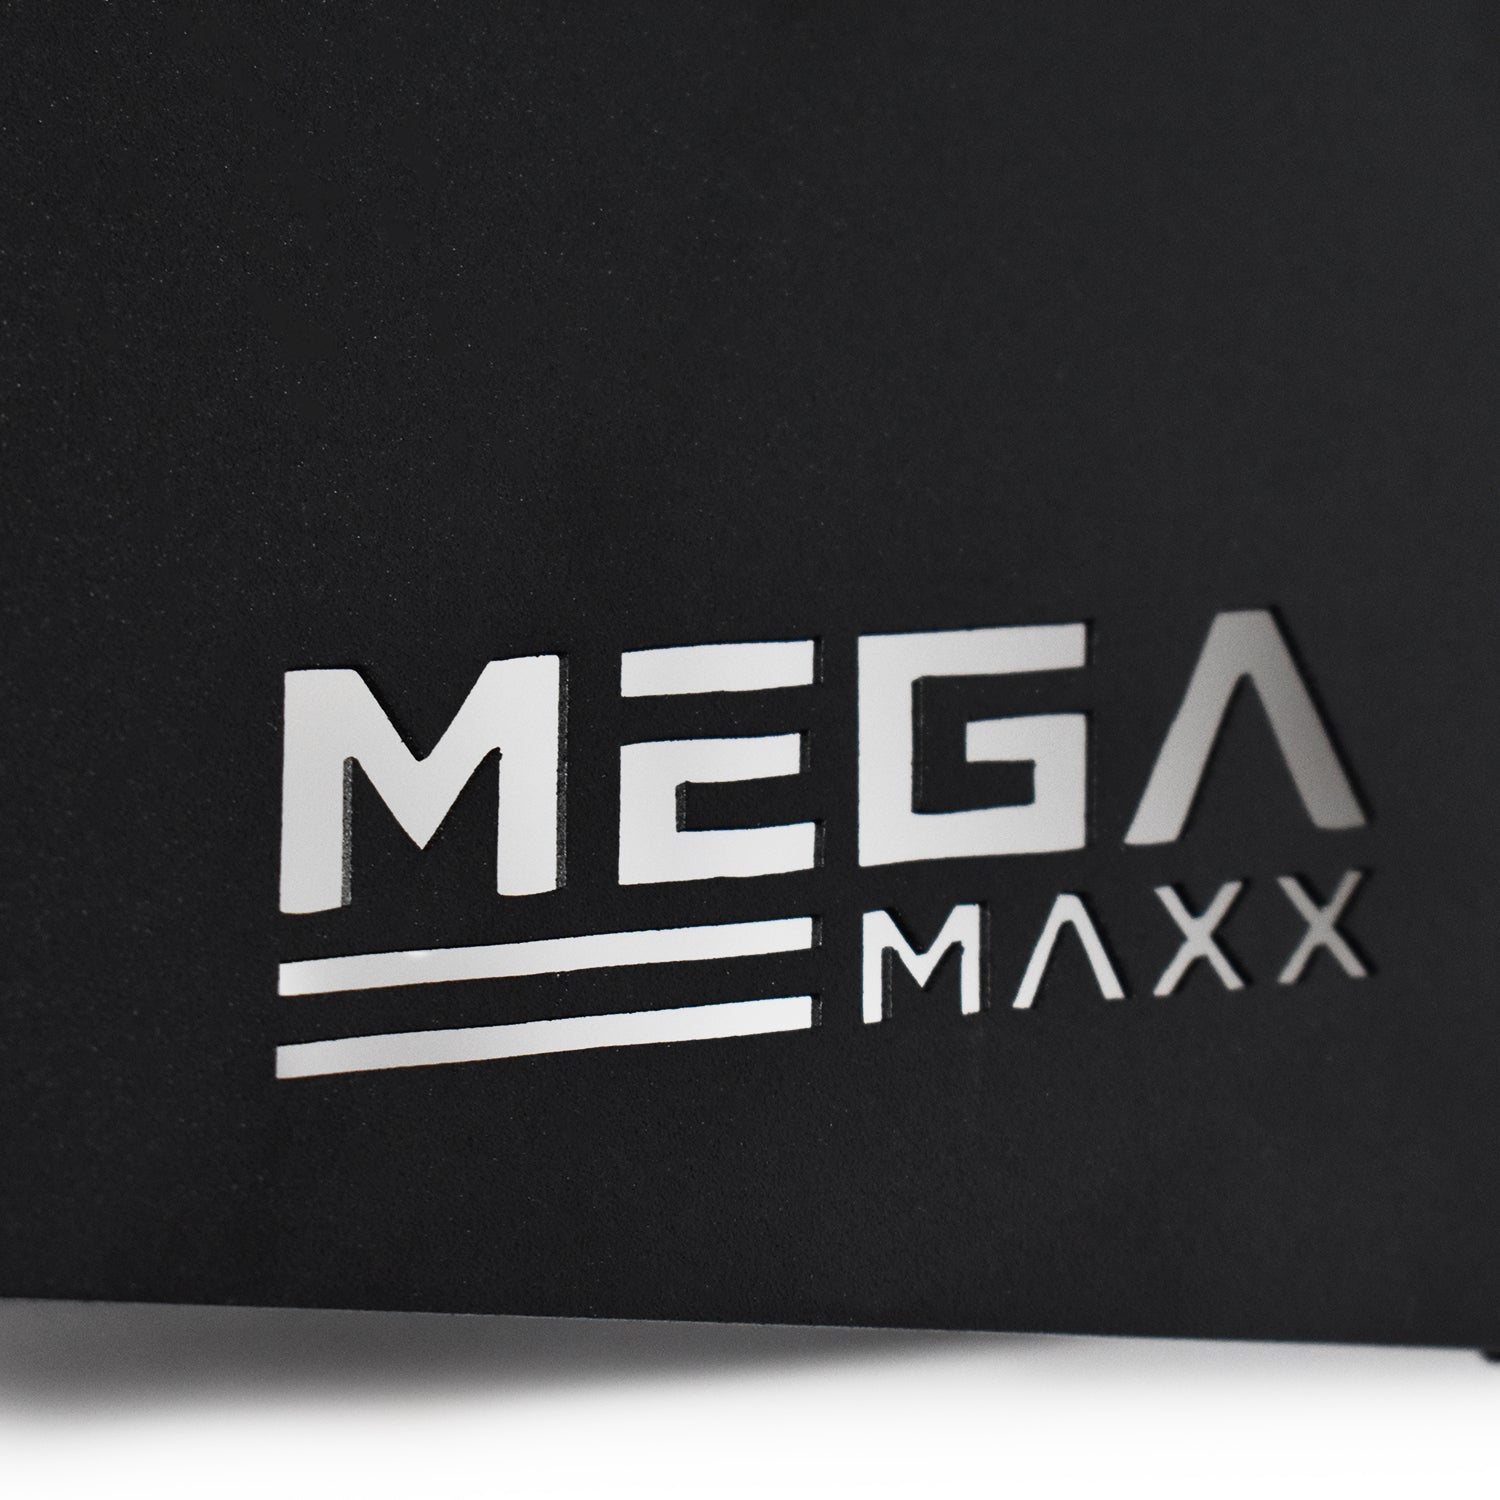 MegaMaxx UK™ Wall Mount Power Tool Storage Unit - Indoor Outdoors